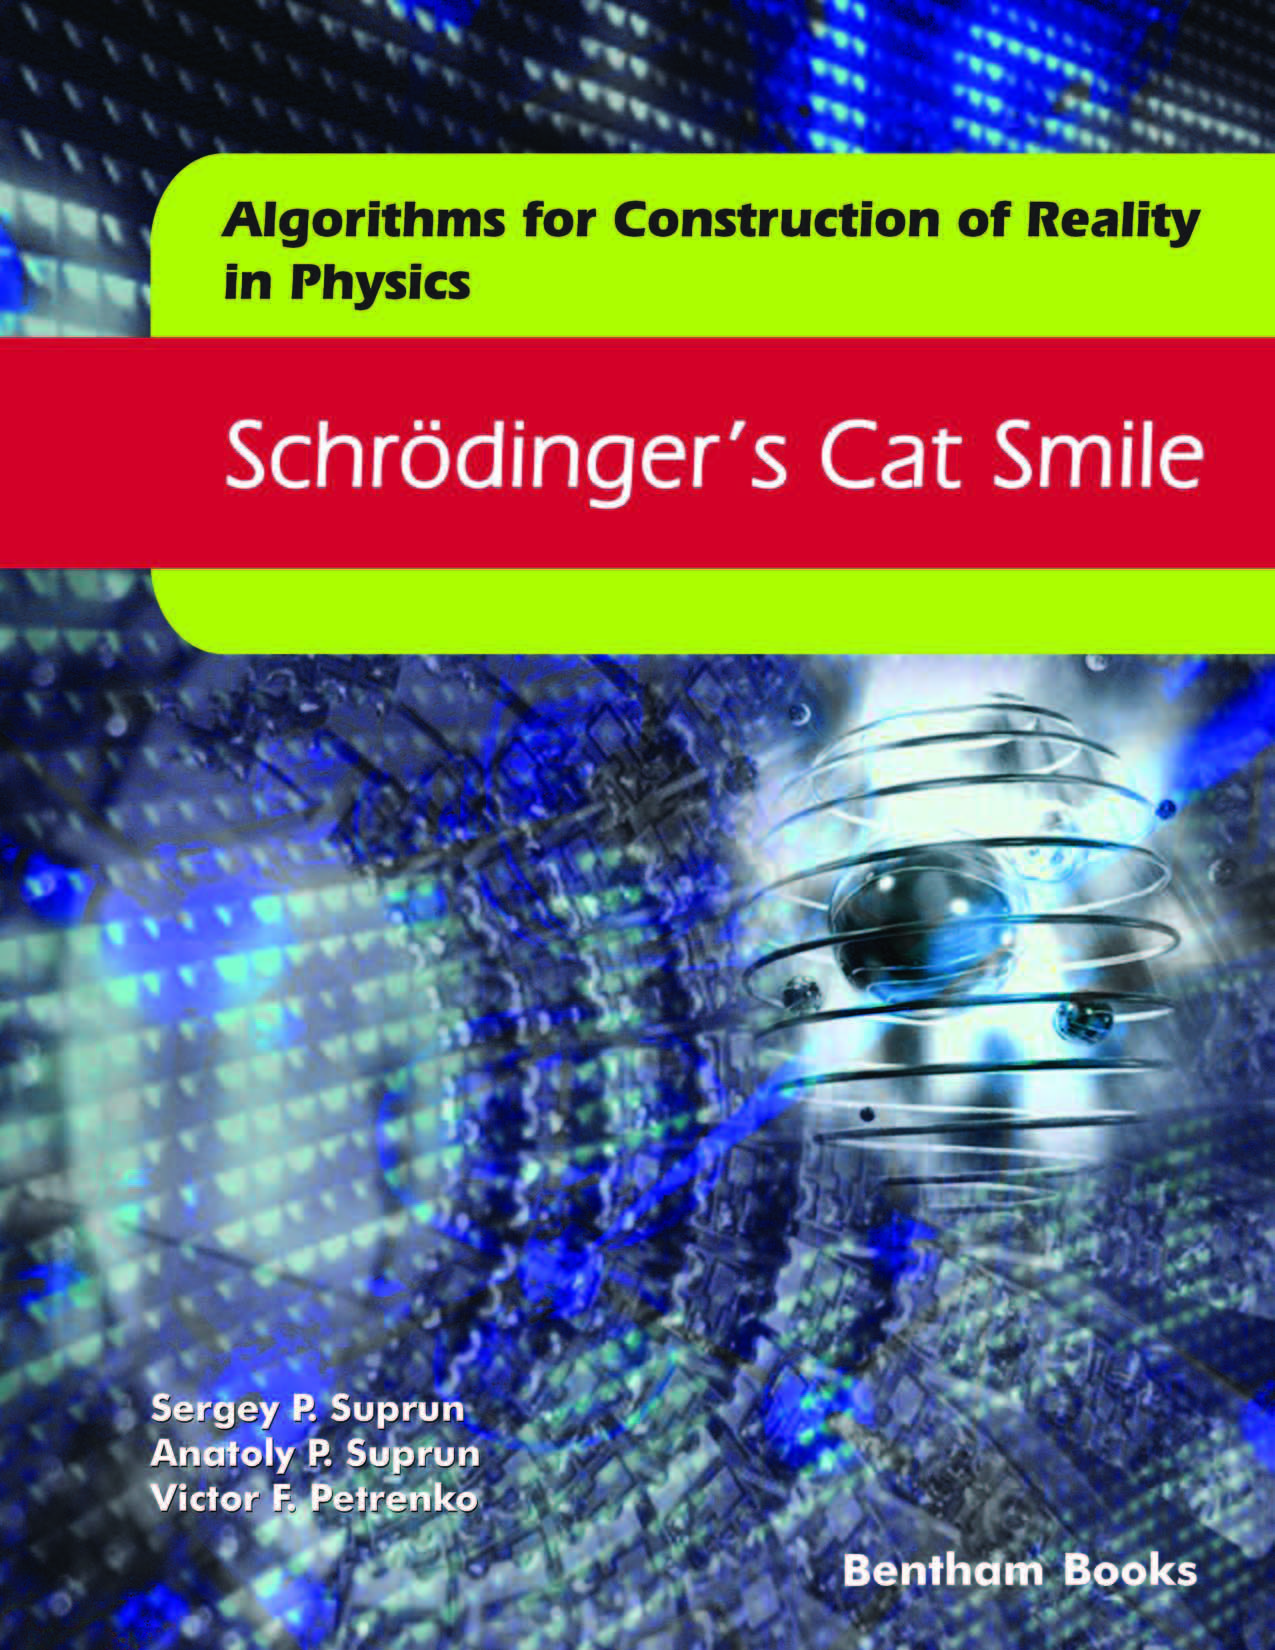 Schrödinger’s Cat Smile